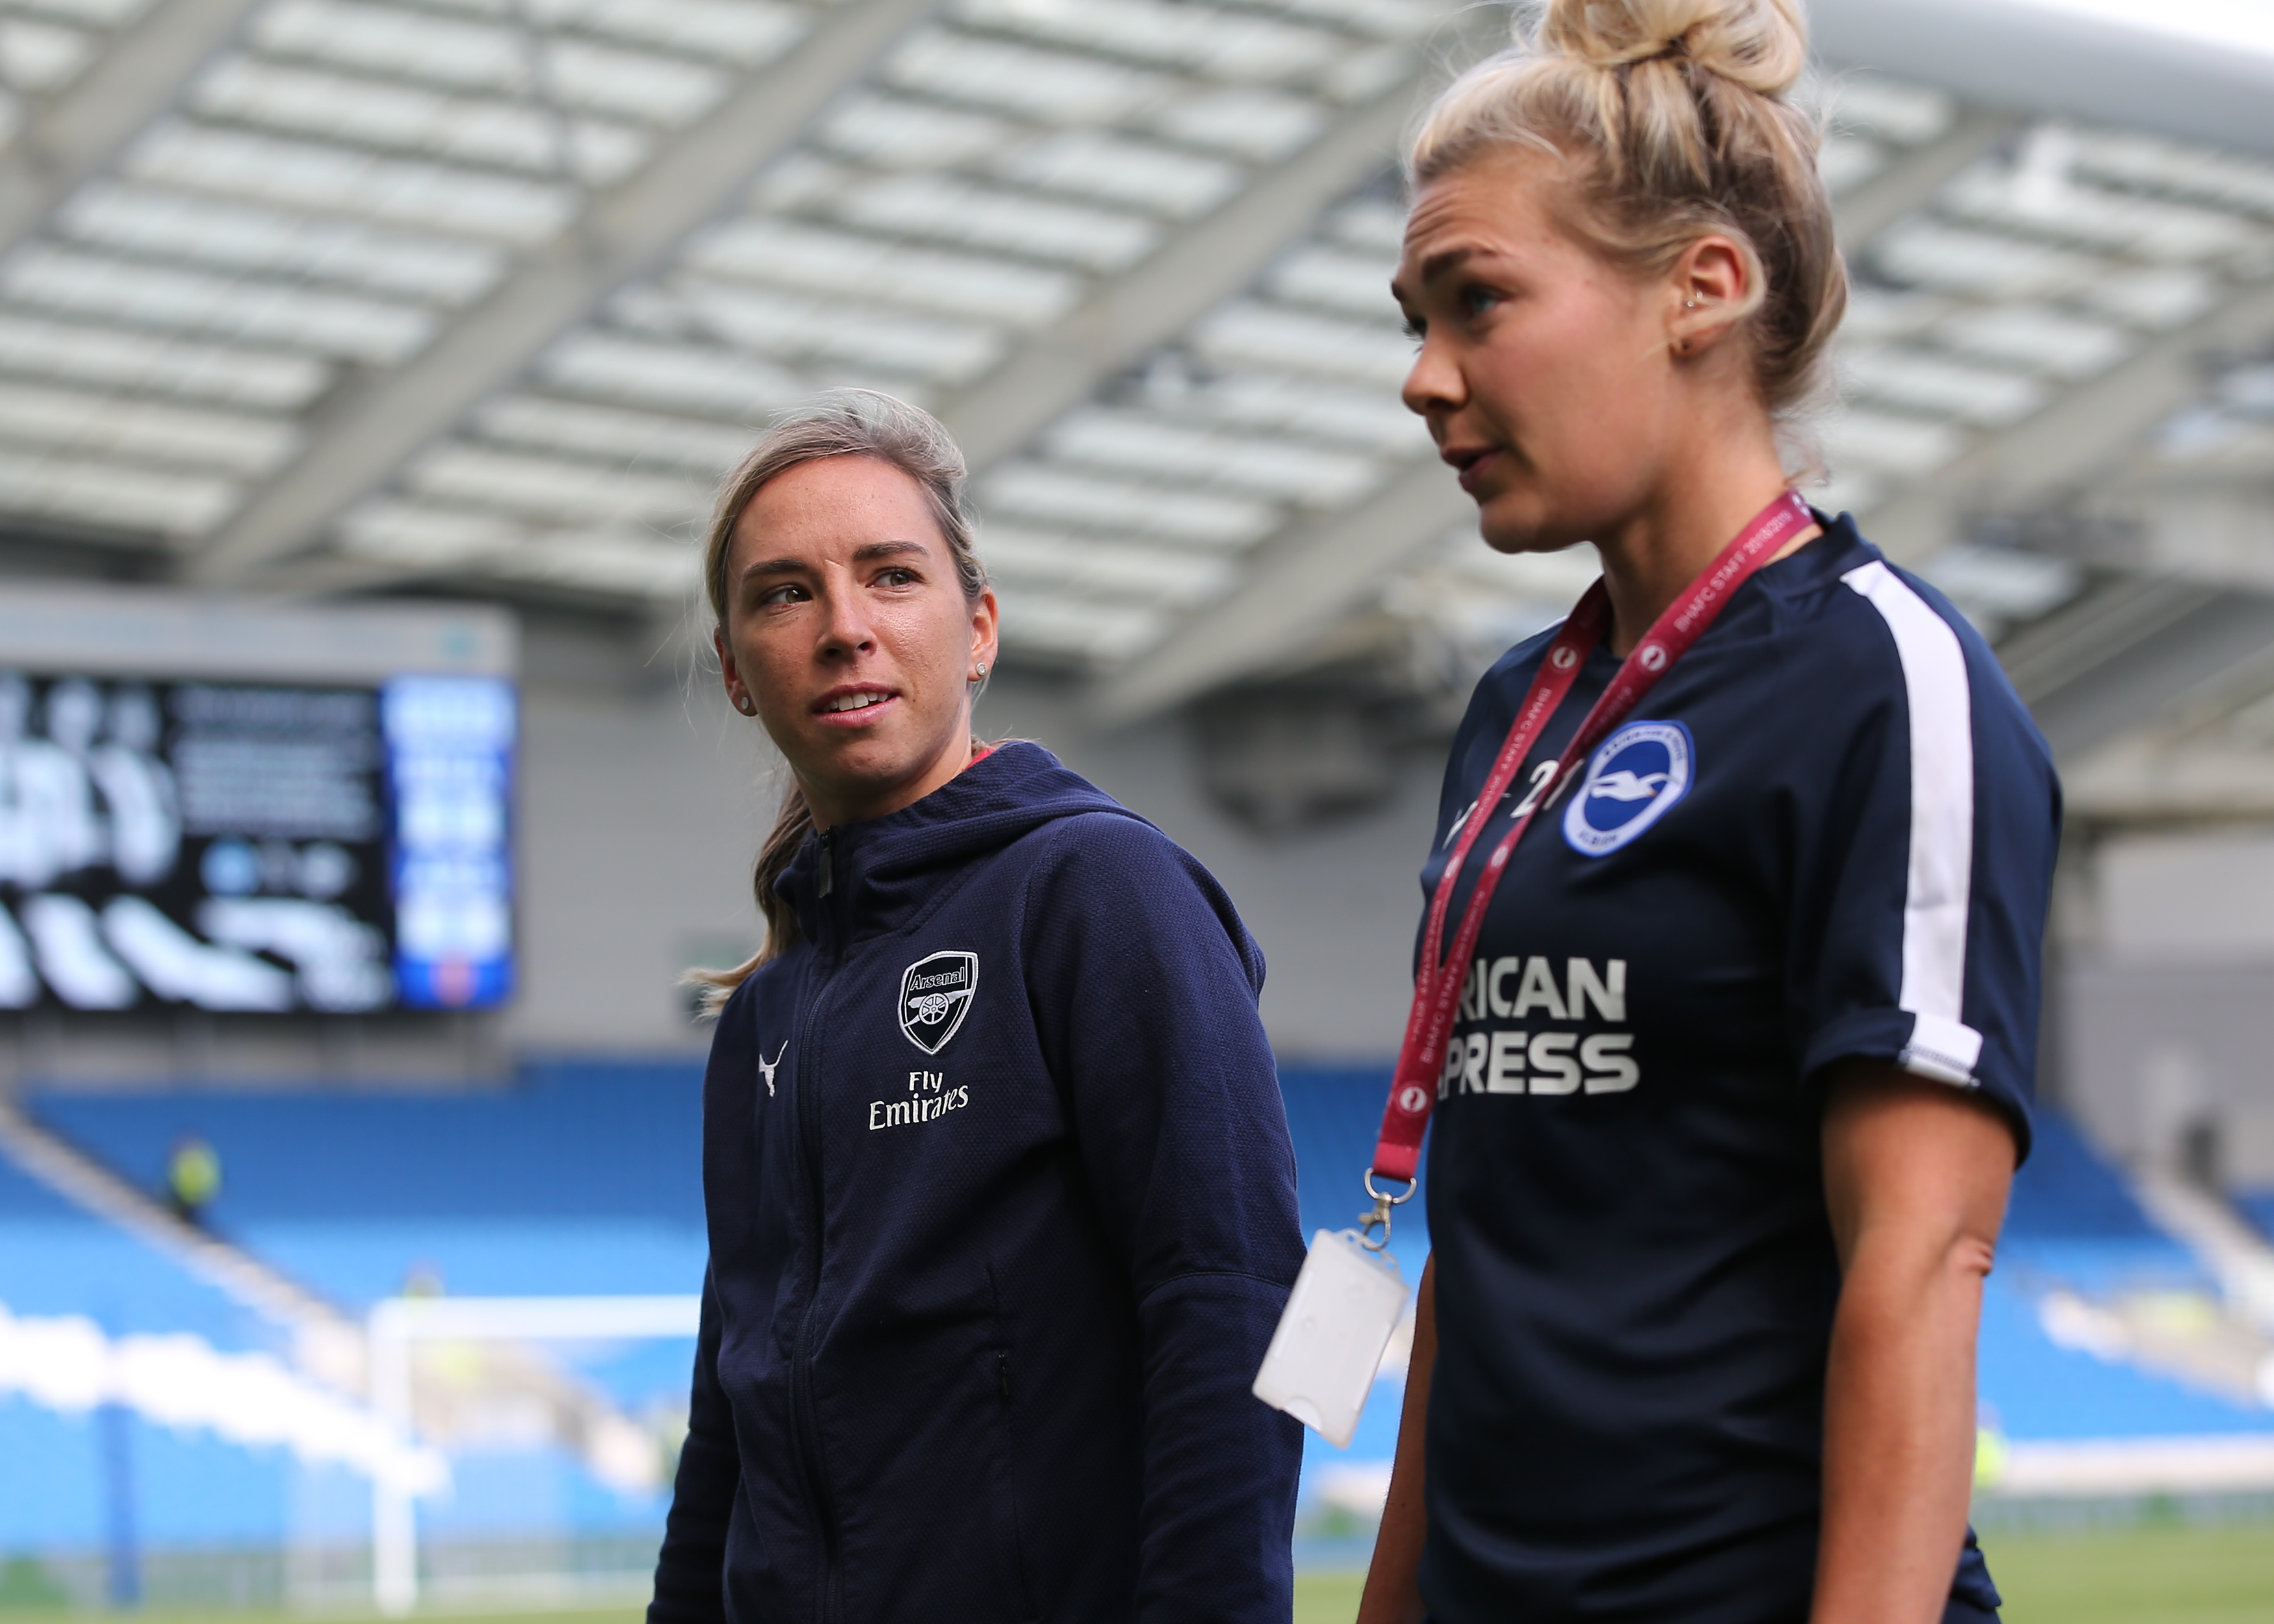 Arsenal's Jordan Nobbs (left) talks with Brighton's Emily Simpkins